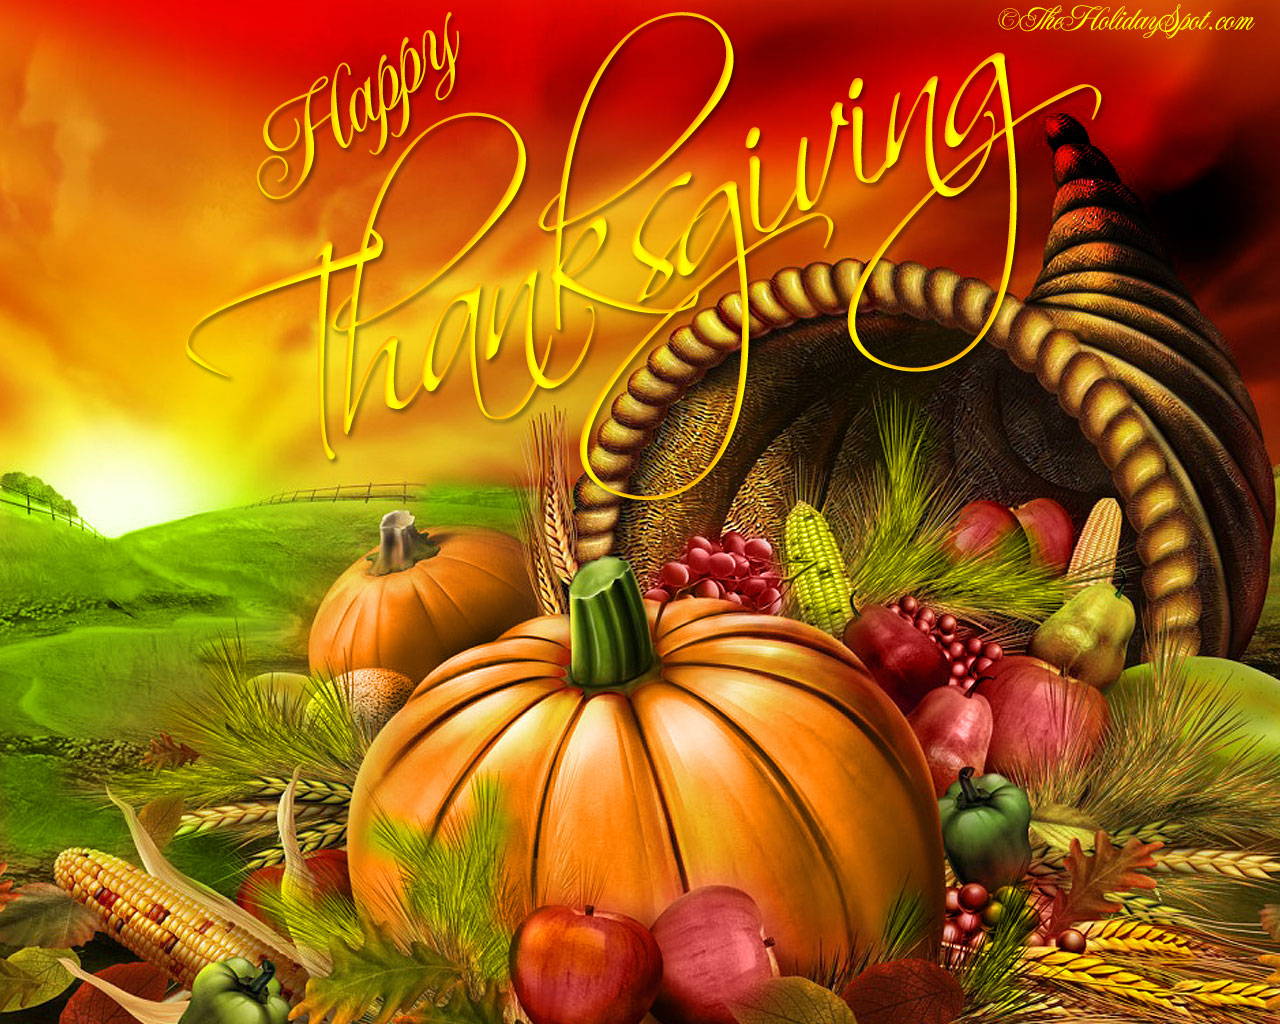 http://www.theholidayspot.com/thanksgiving/wallpapers/new_images/thanksgiving-cornucopia.jpg